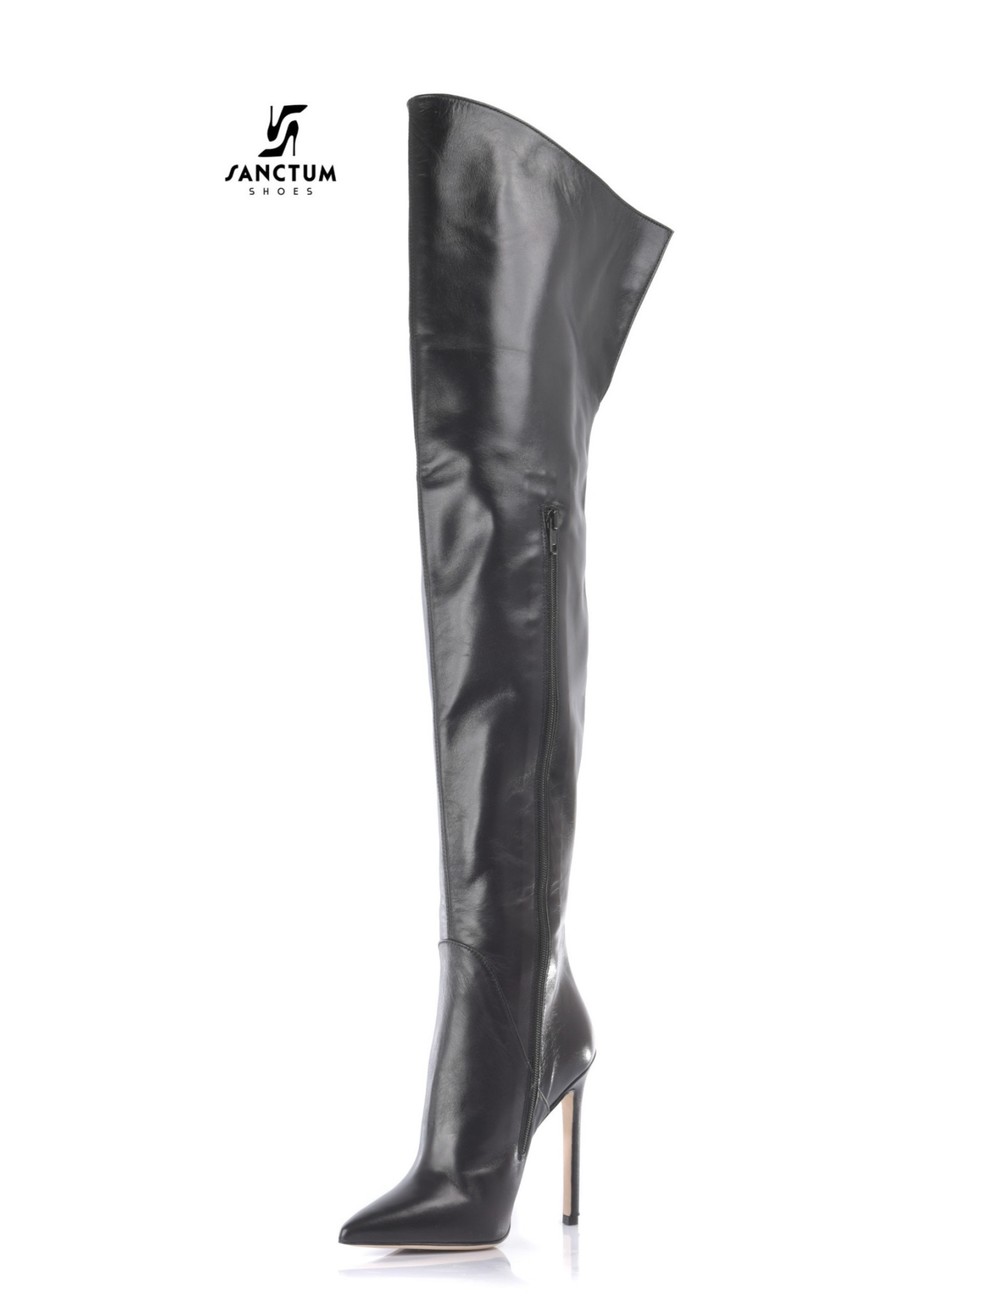 Sanctum High Italian THIGH boots VESTA with stiletto heels in genuine leather